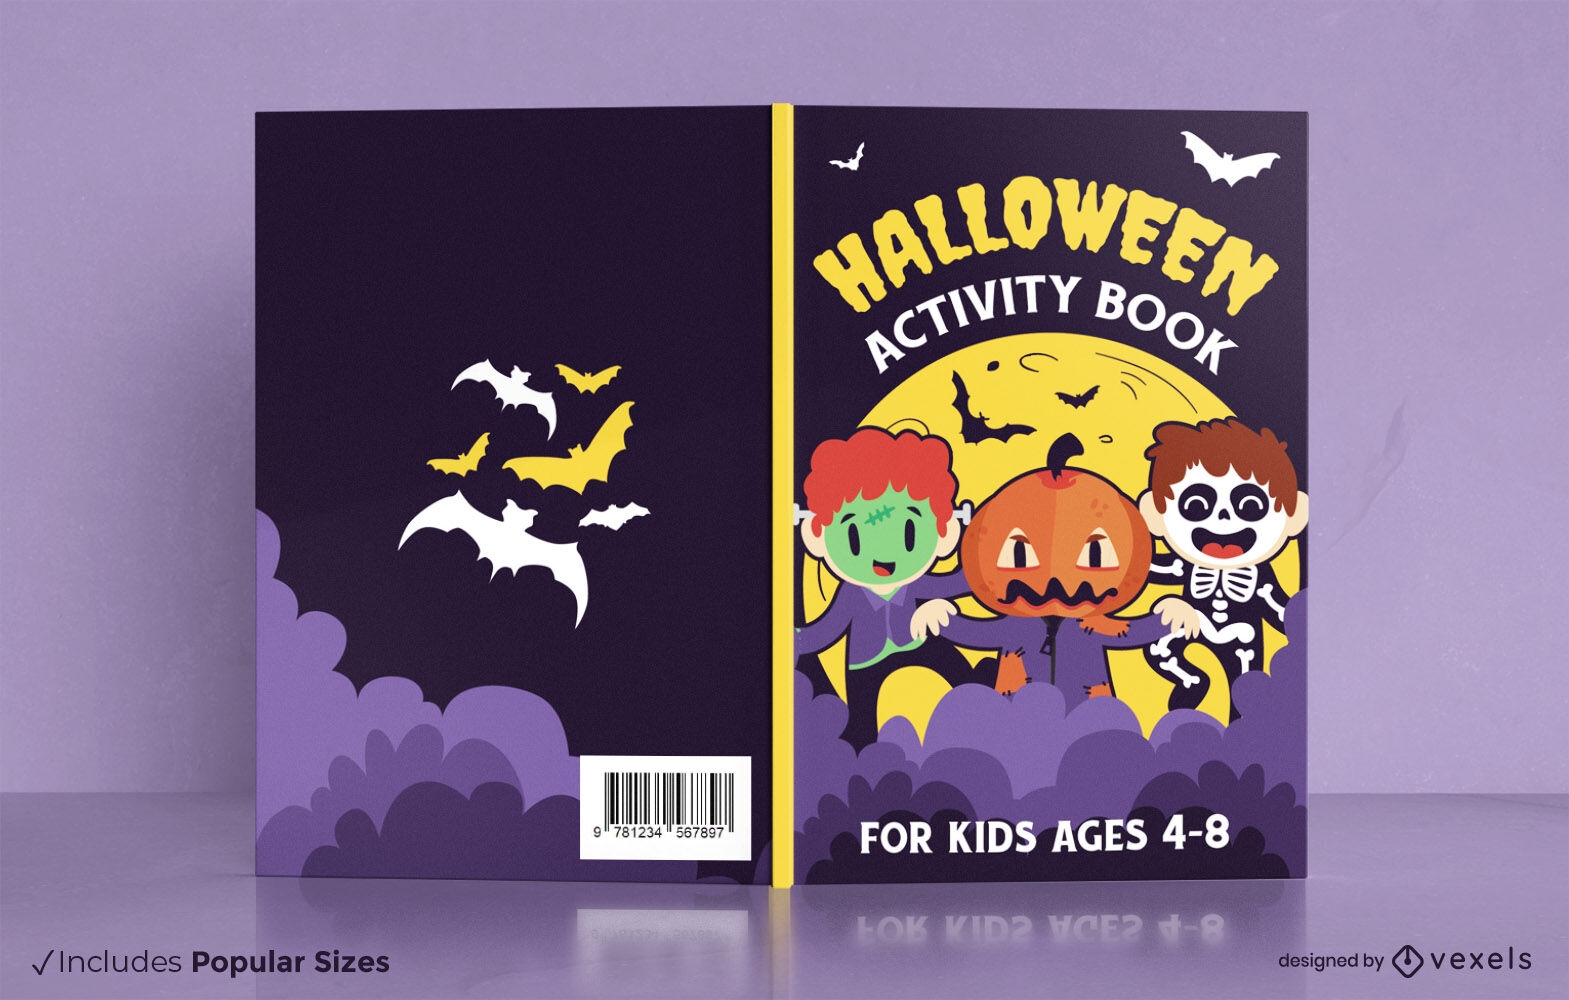 Childrens halloween costume book cover design